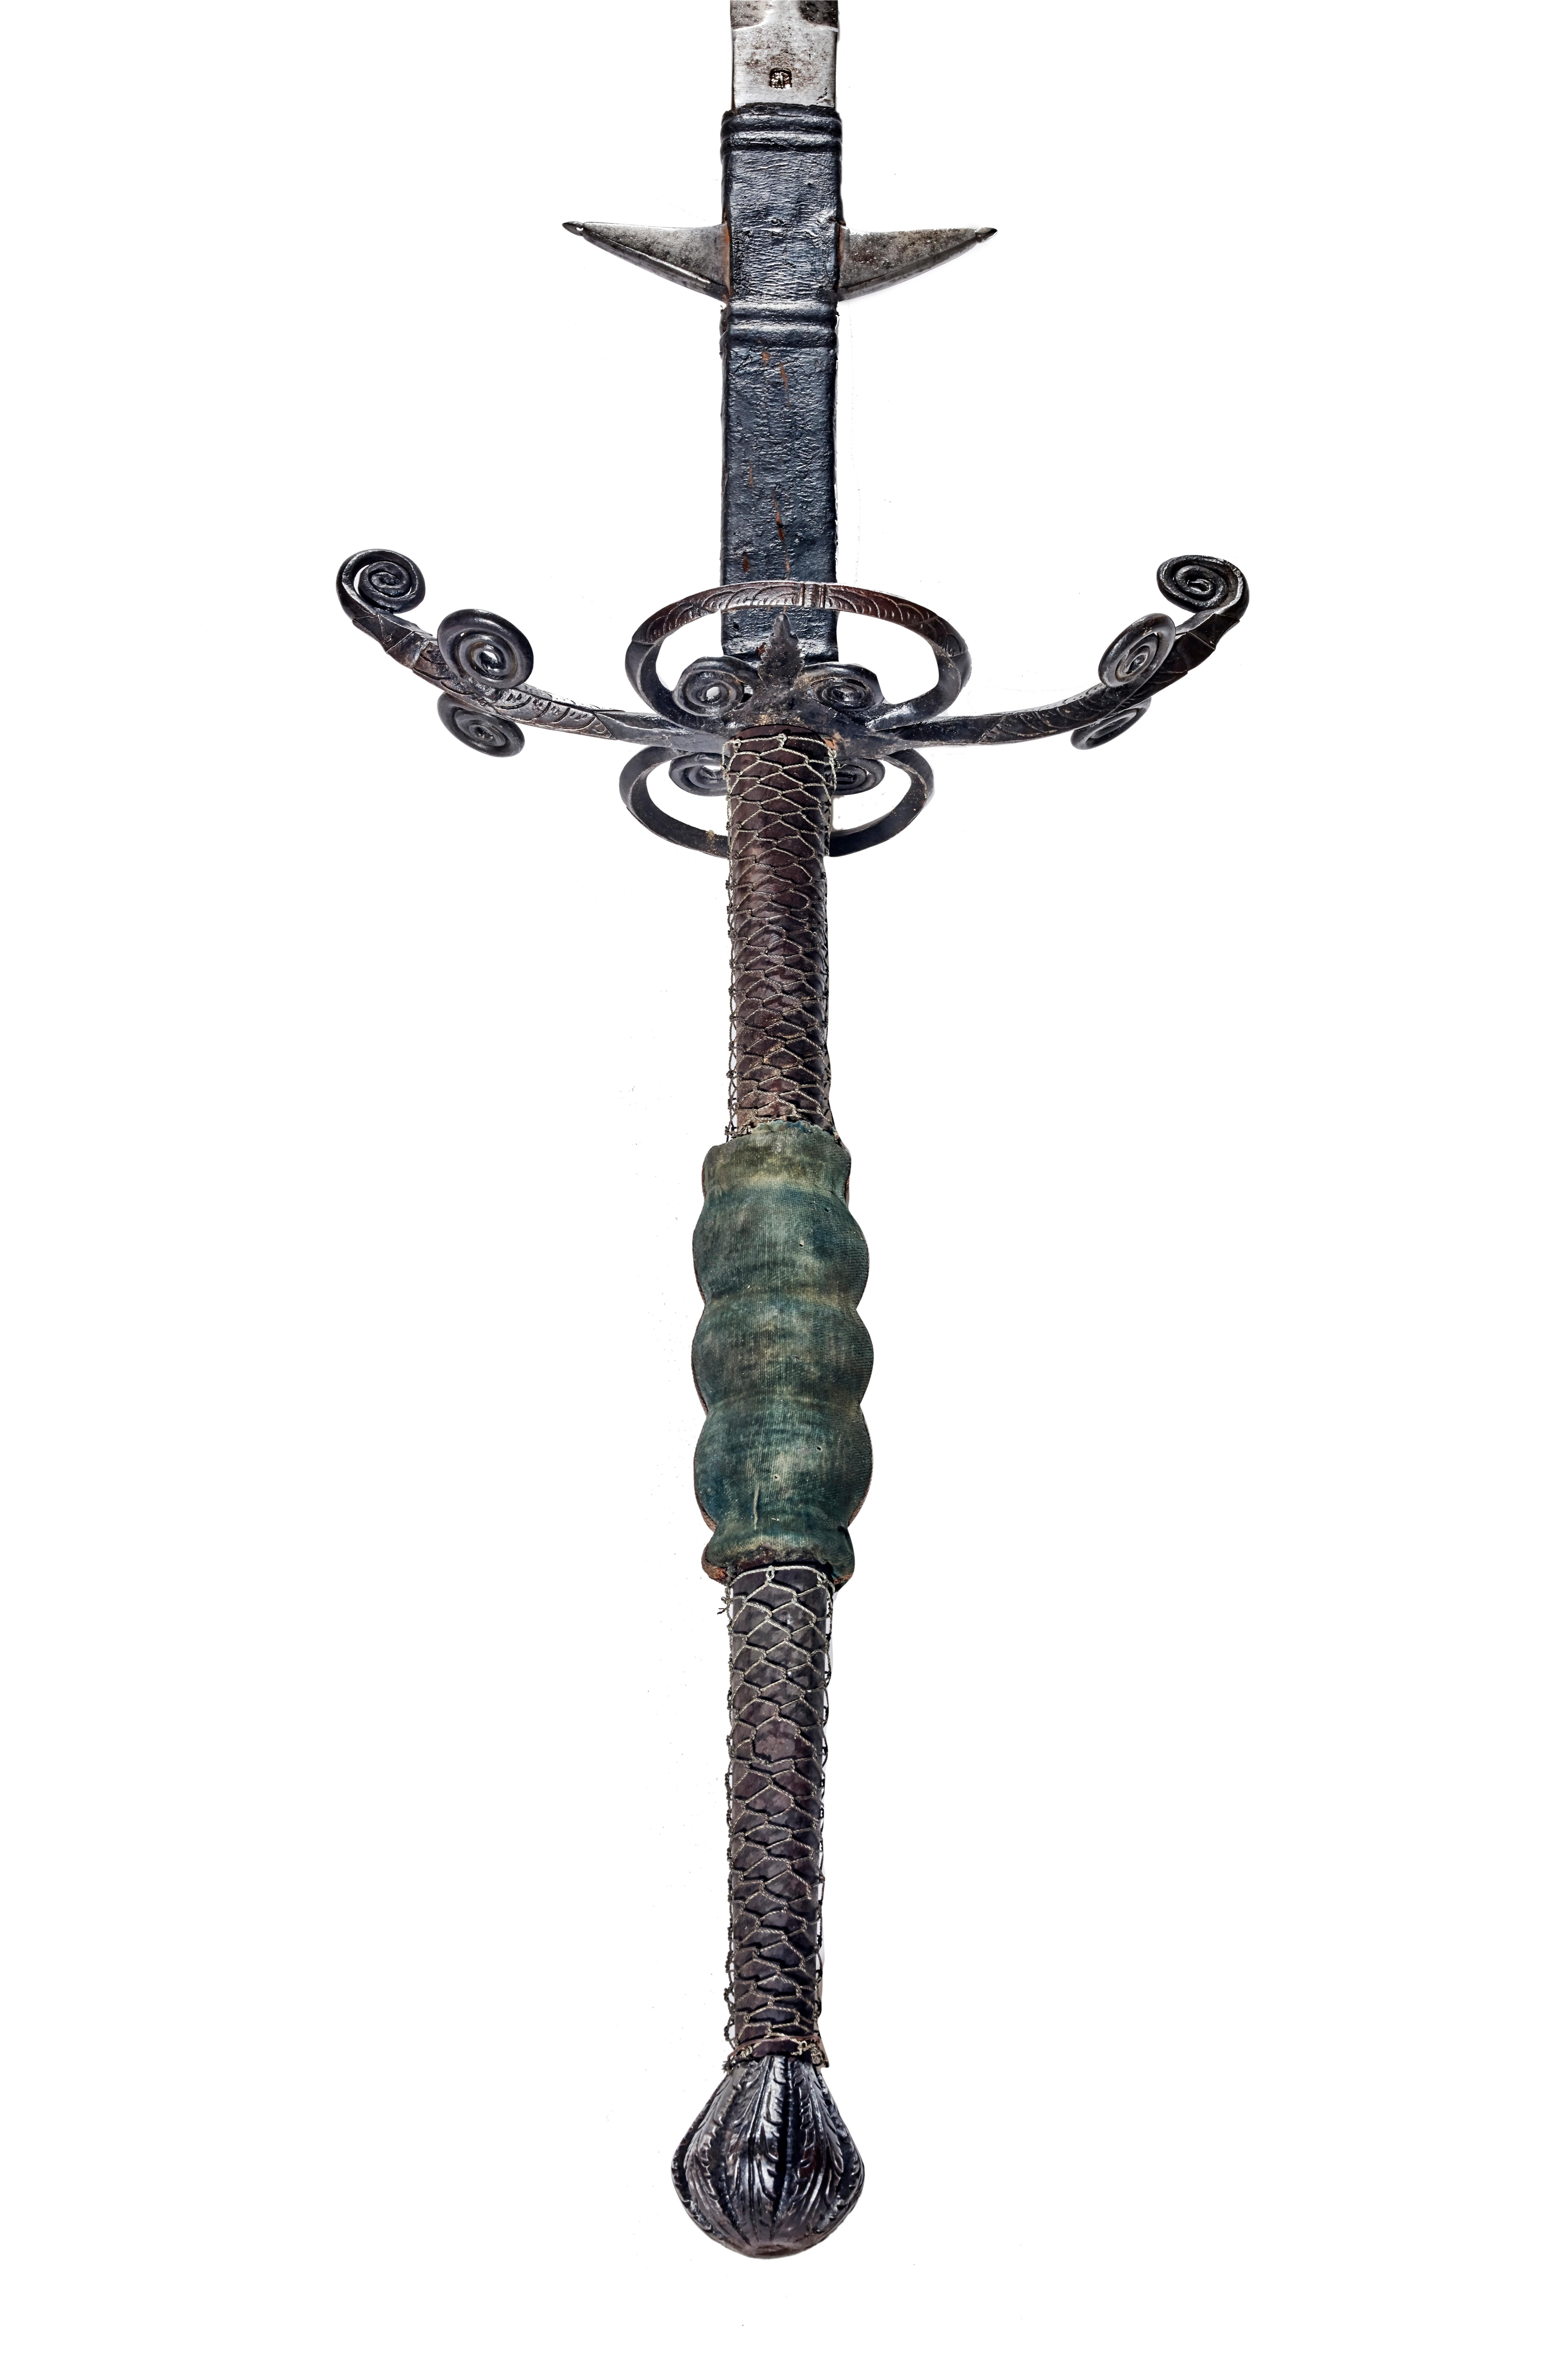 16th century swords